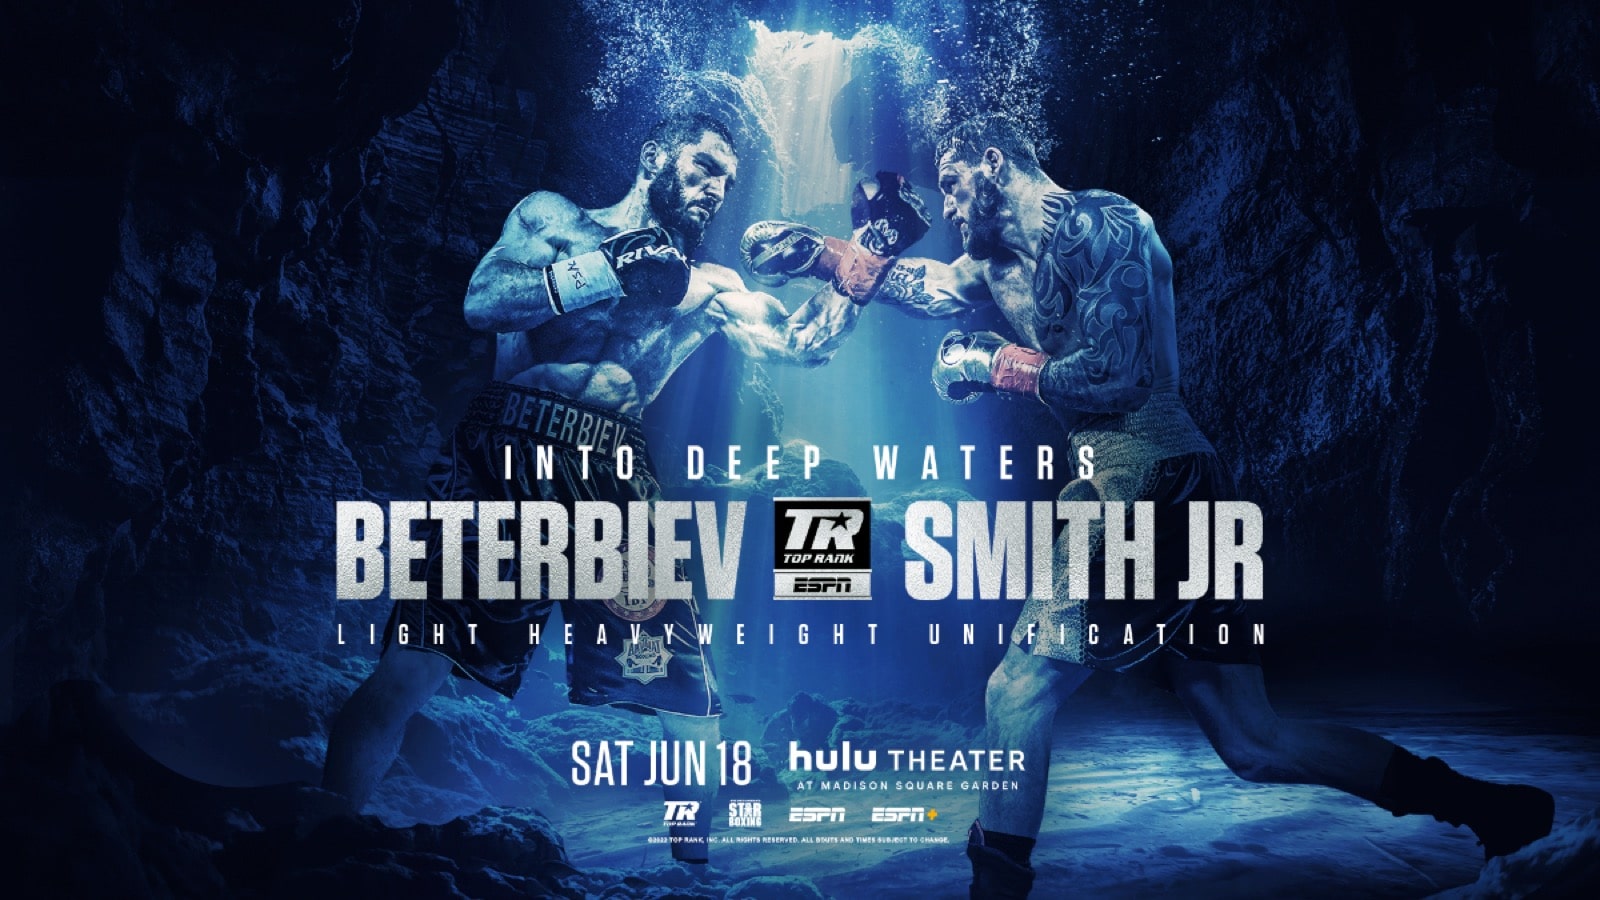 Artur Beterbiev, Joe Smith Jr. boxing image / photo